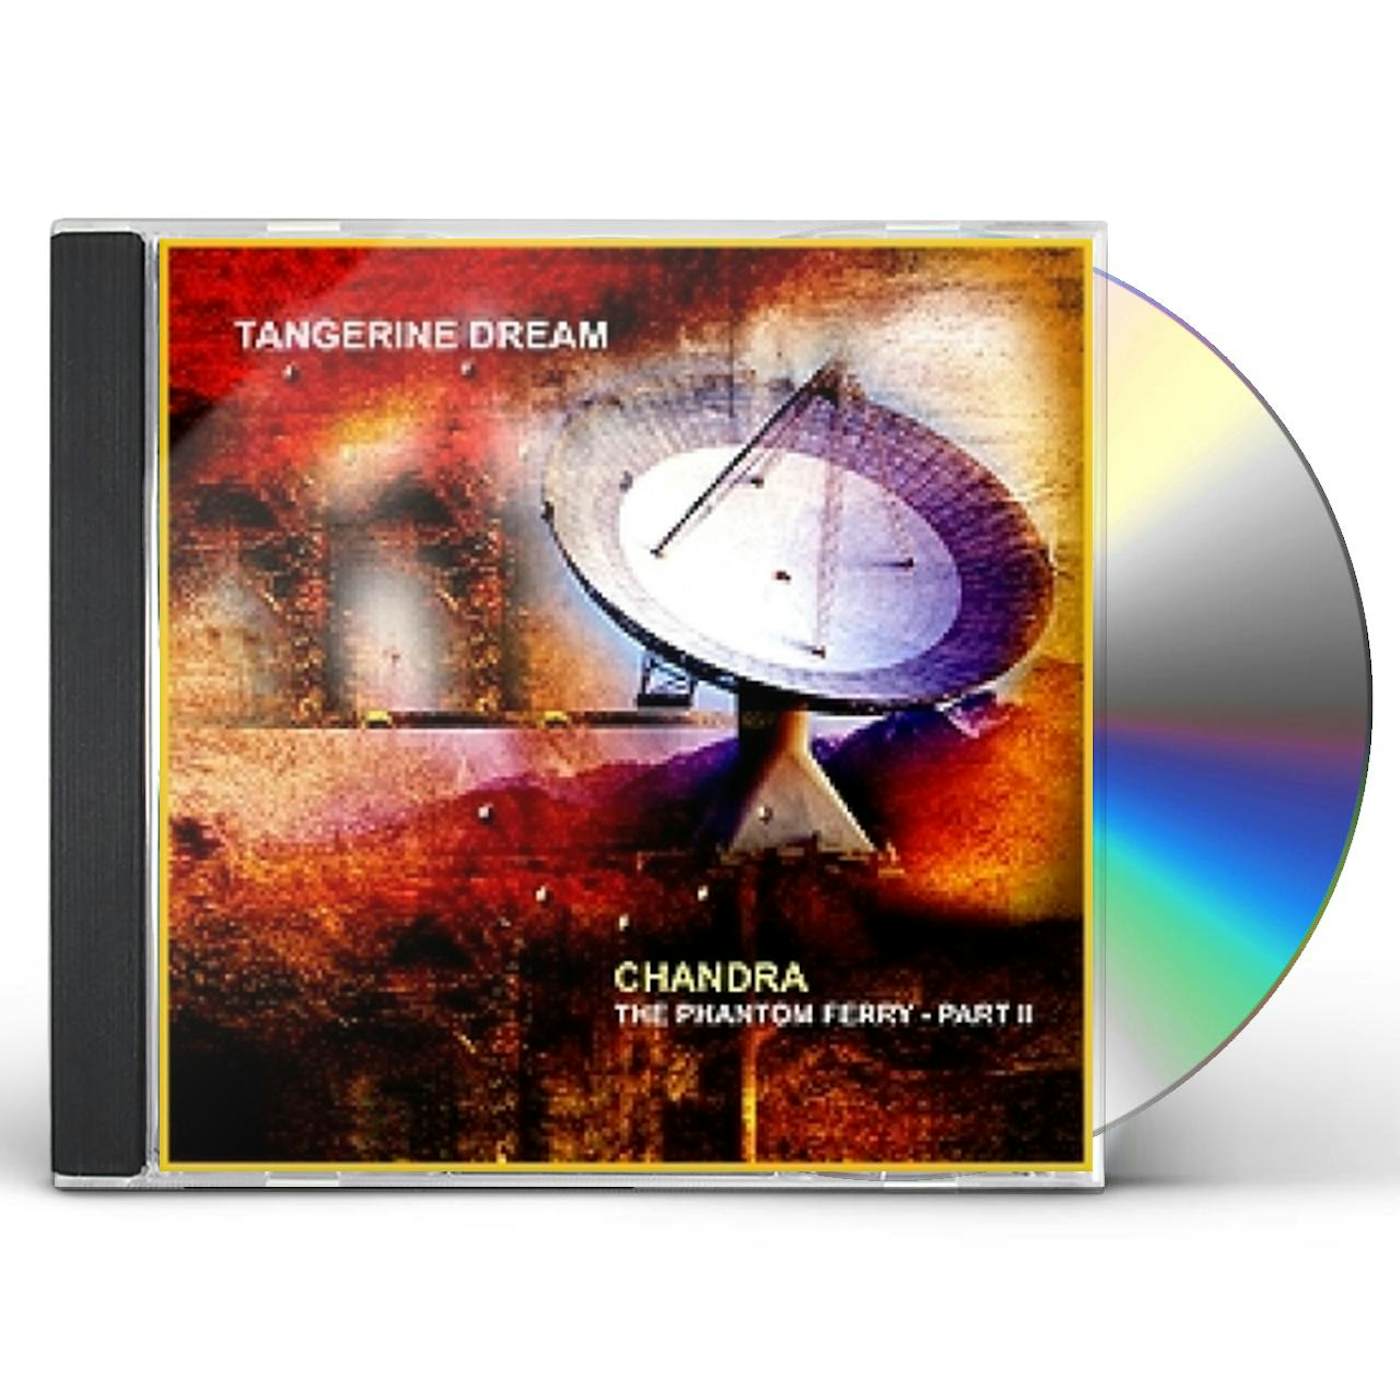 Tangerine Dream CHANDRA - THE PHANTOM FERRY - PART II CD